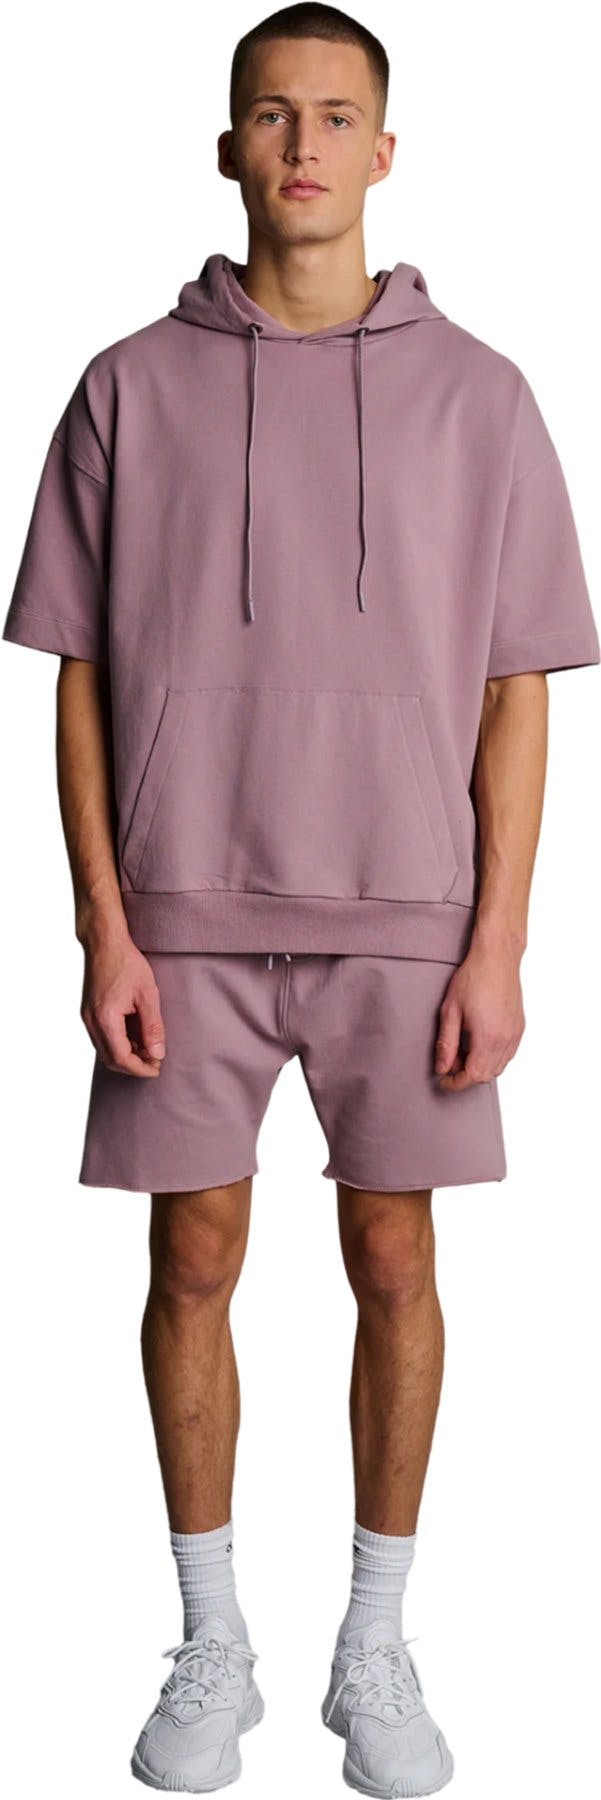 Product image for Short Sleeve Comfort Hoodie - Men's